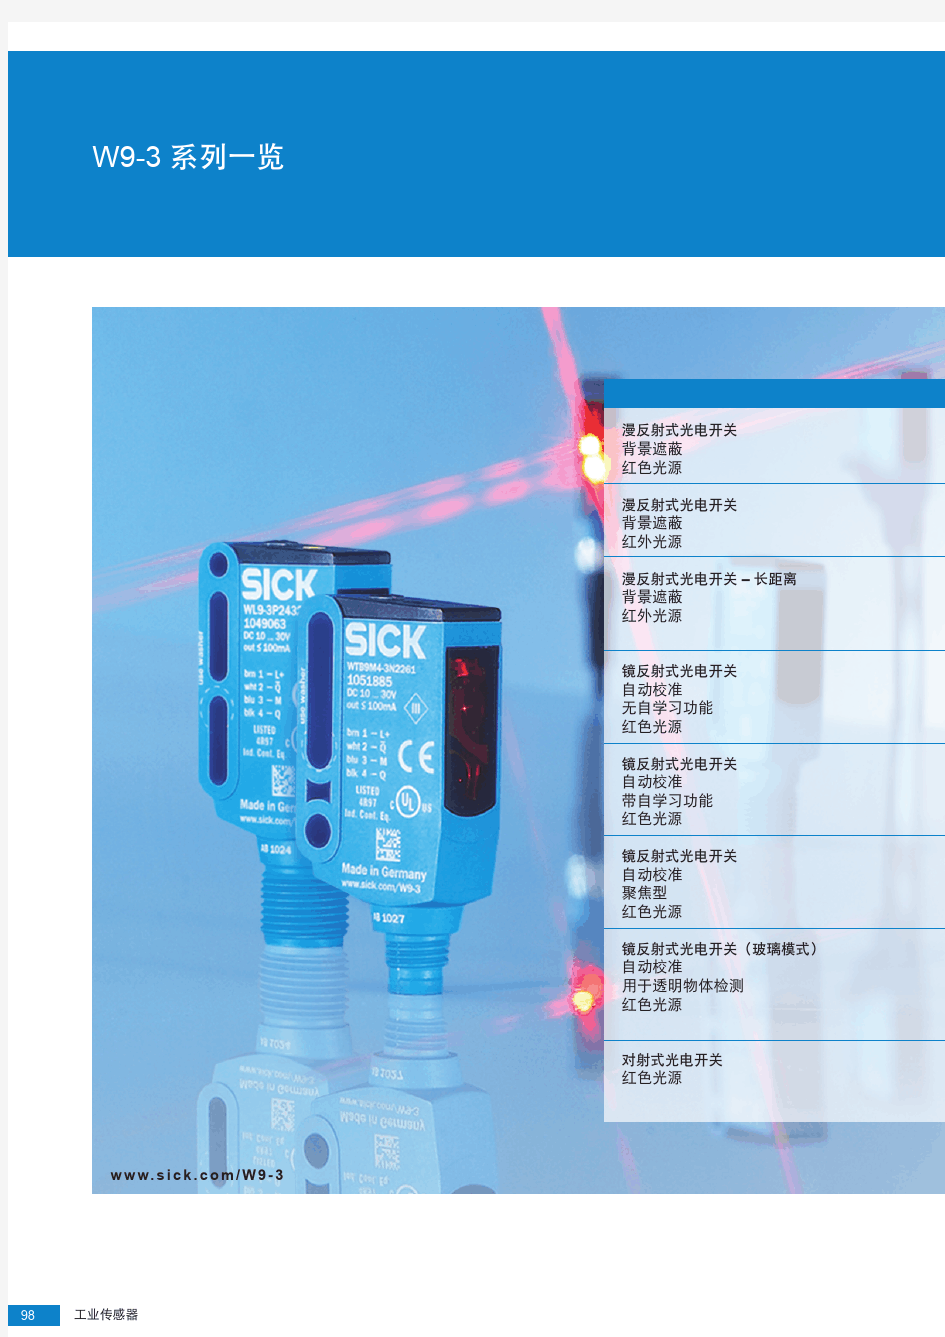 W9-3小型光电传感器选型手册(中文版)